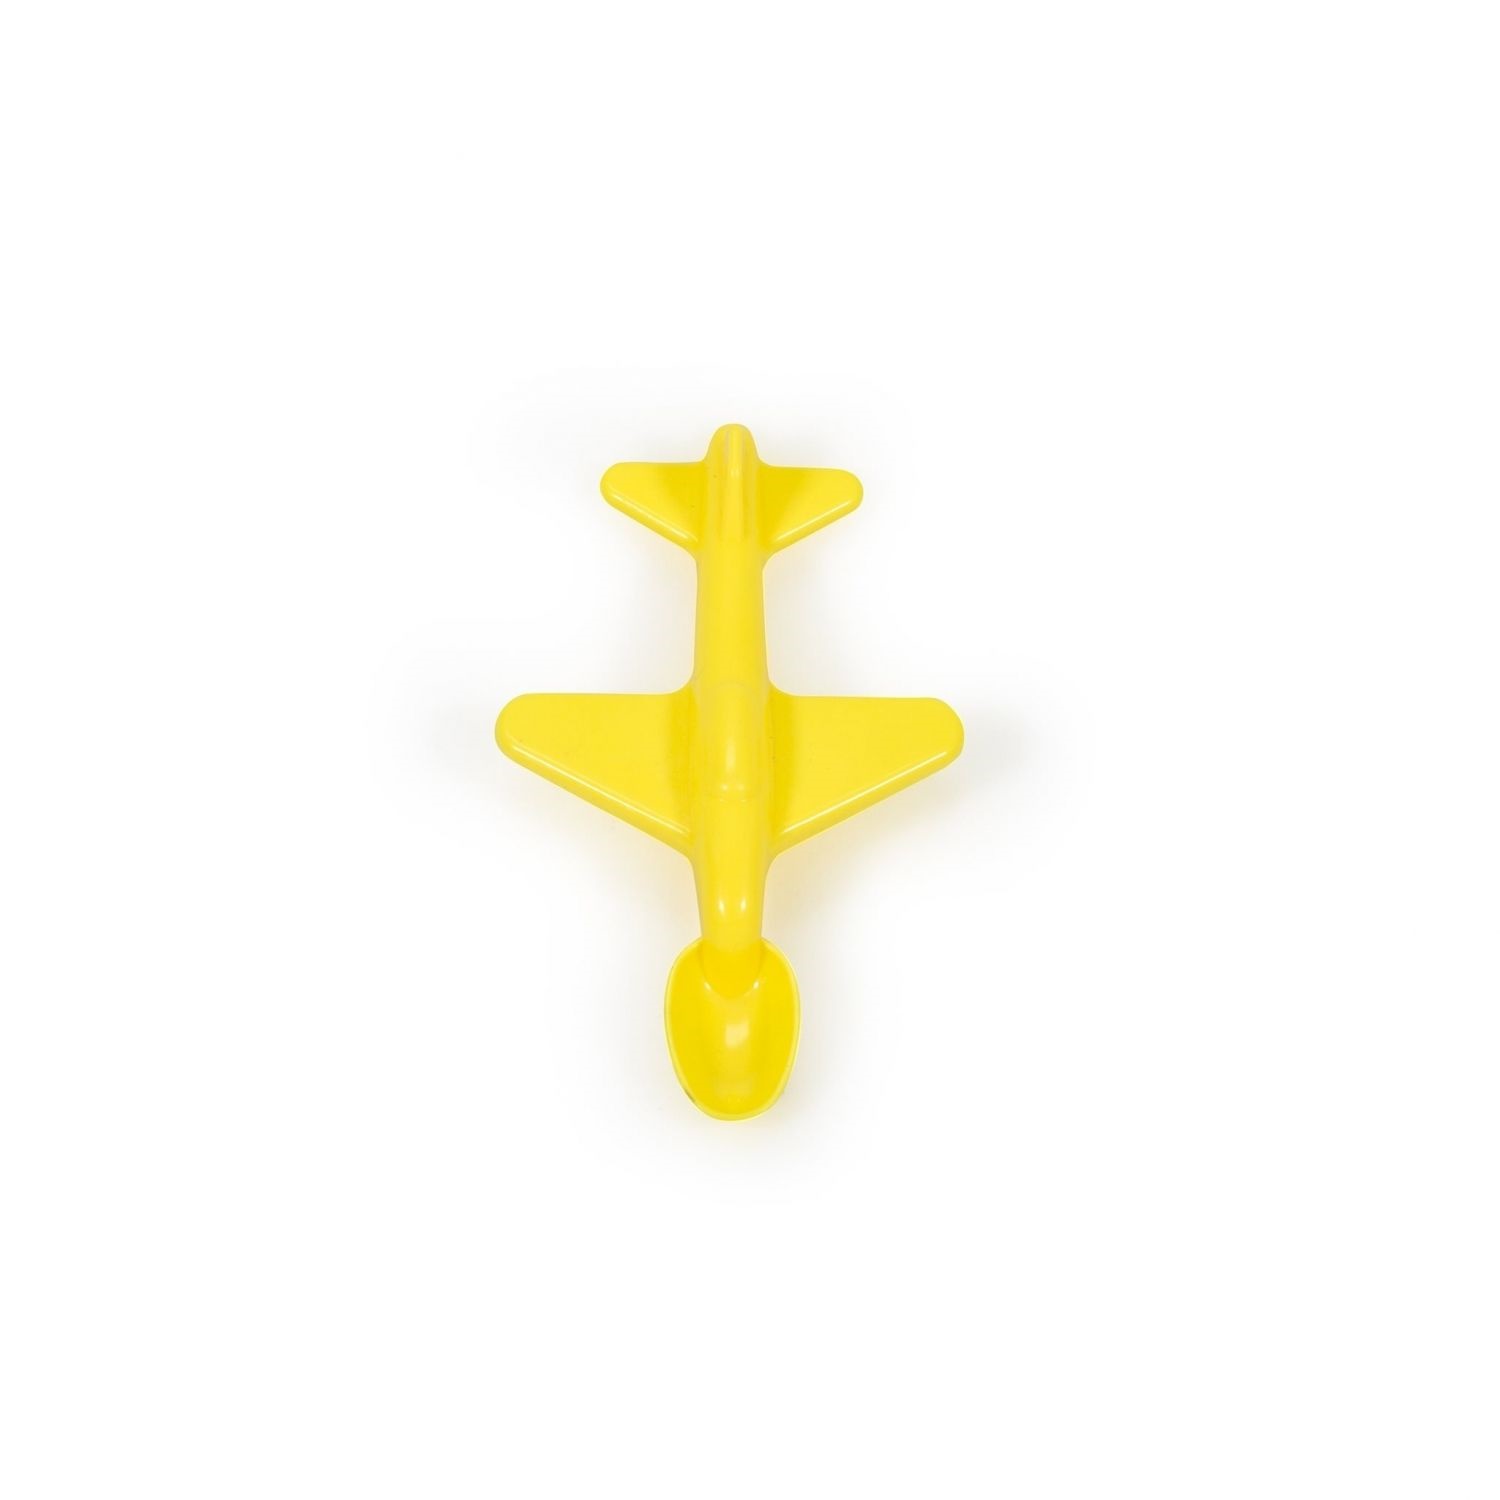 Spoon airoplane yellow